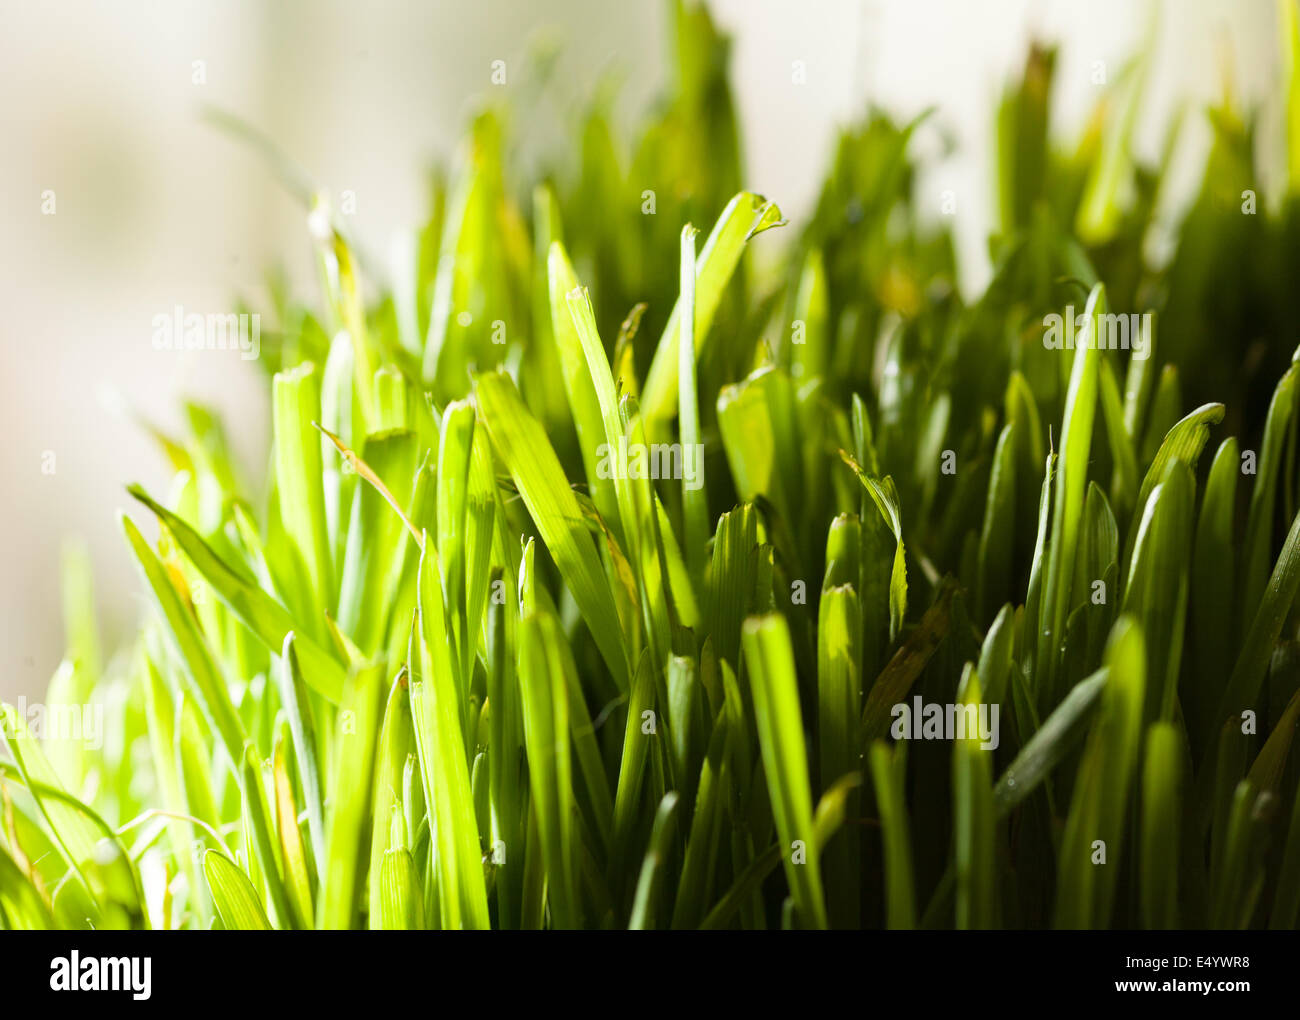 grass indoors Stock Photo